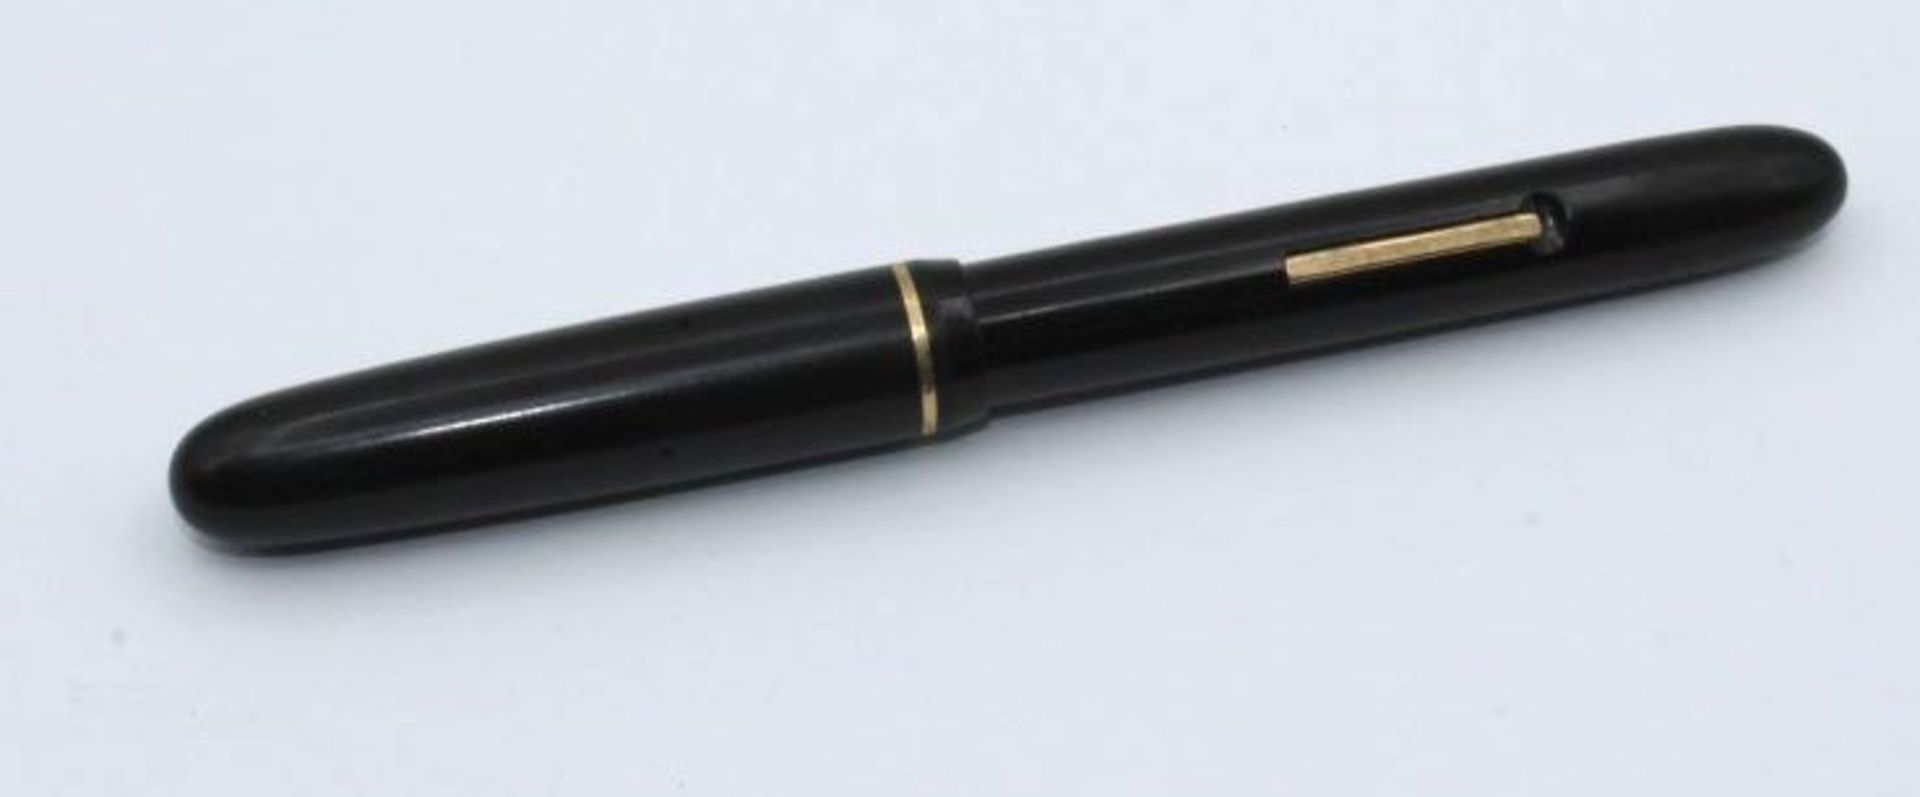 Vintage-Füller, Dunhill Namiki, Fabrique au Japon, 18ct Goldfeder, Kappenclip fehlt.- - -22.61 %